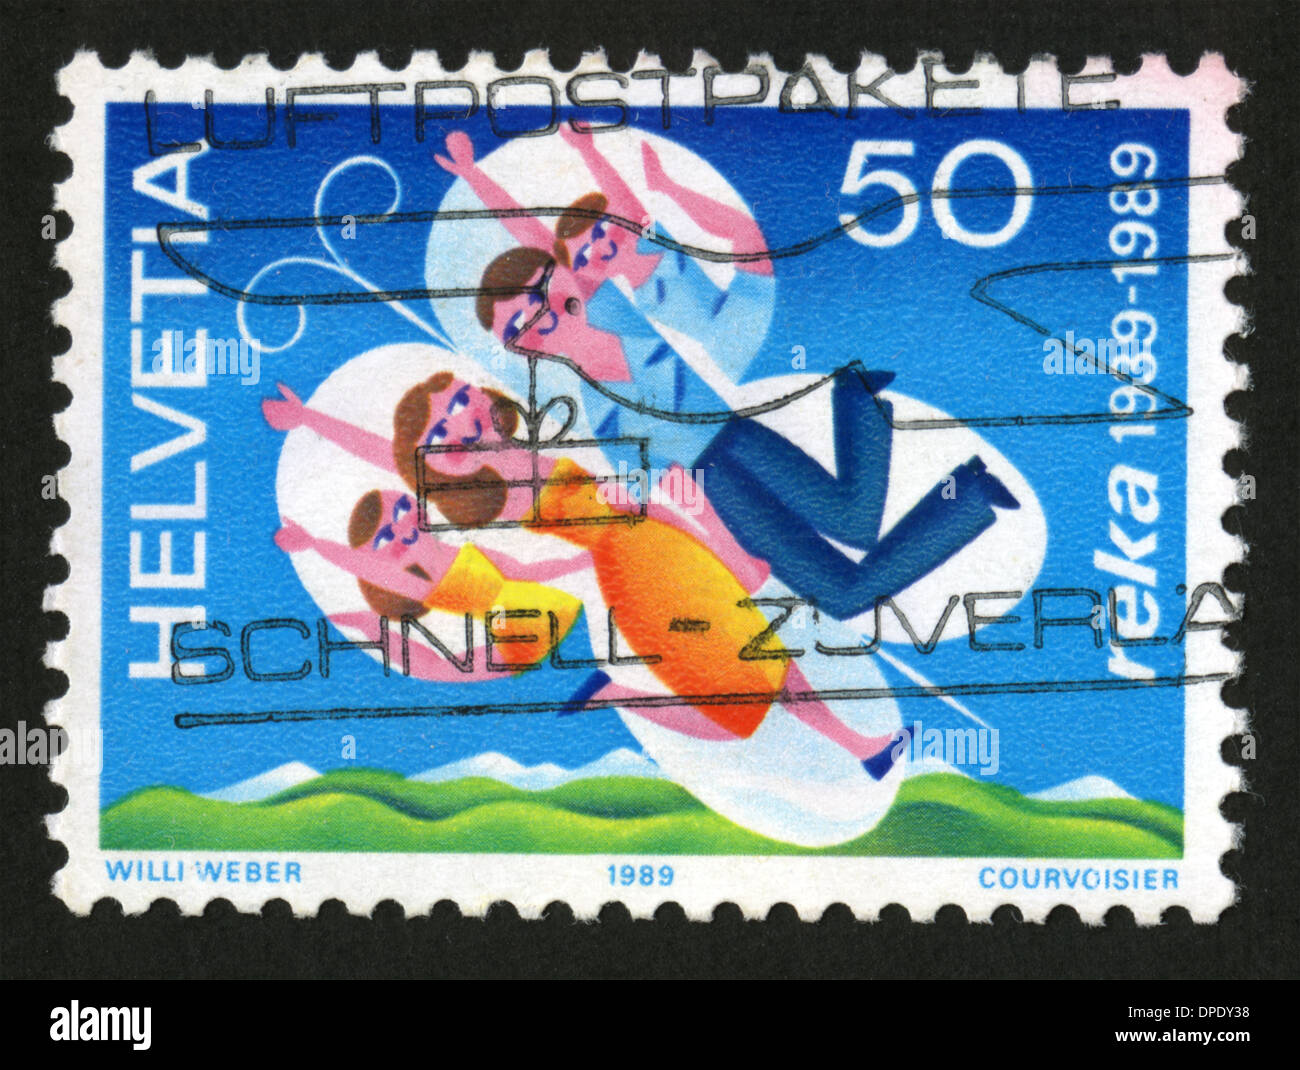 Schweiz, Helvetia, Briefmarke, post markieren, Stempel, Poststempel, Stockfoto